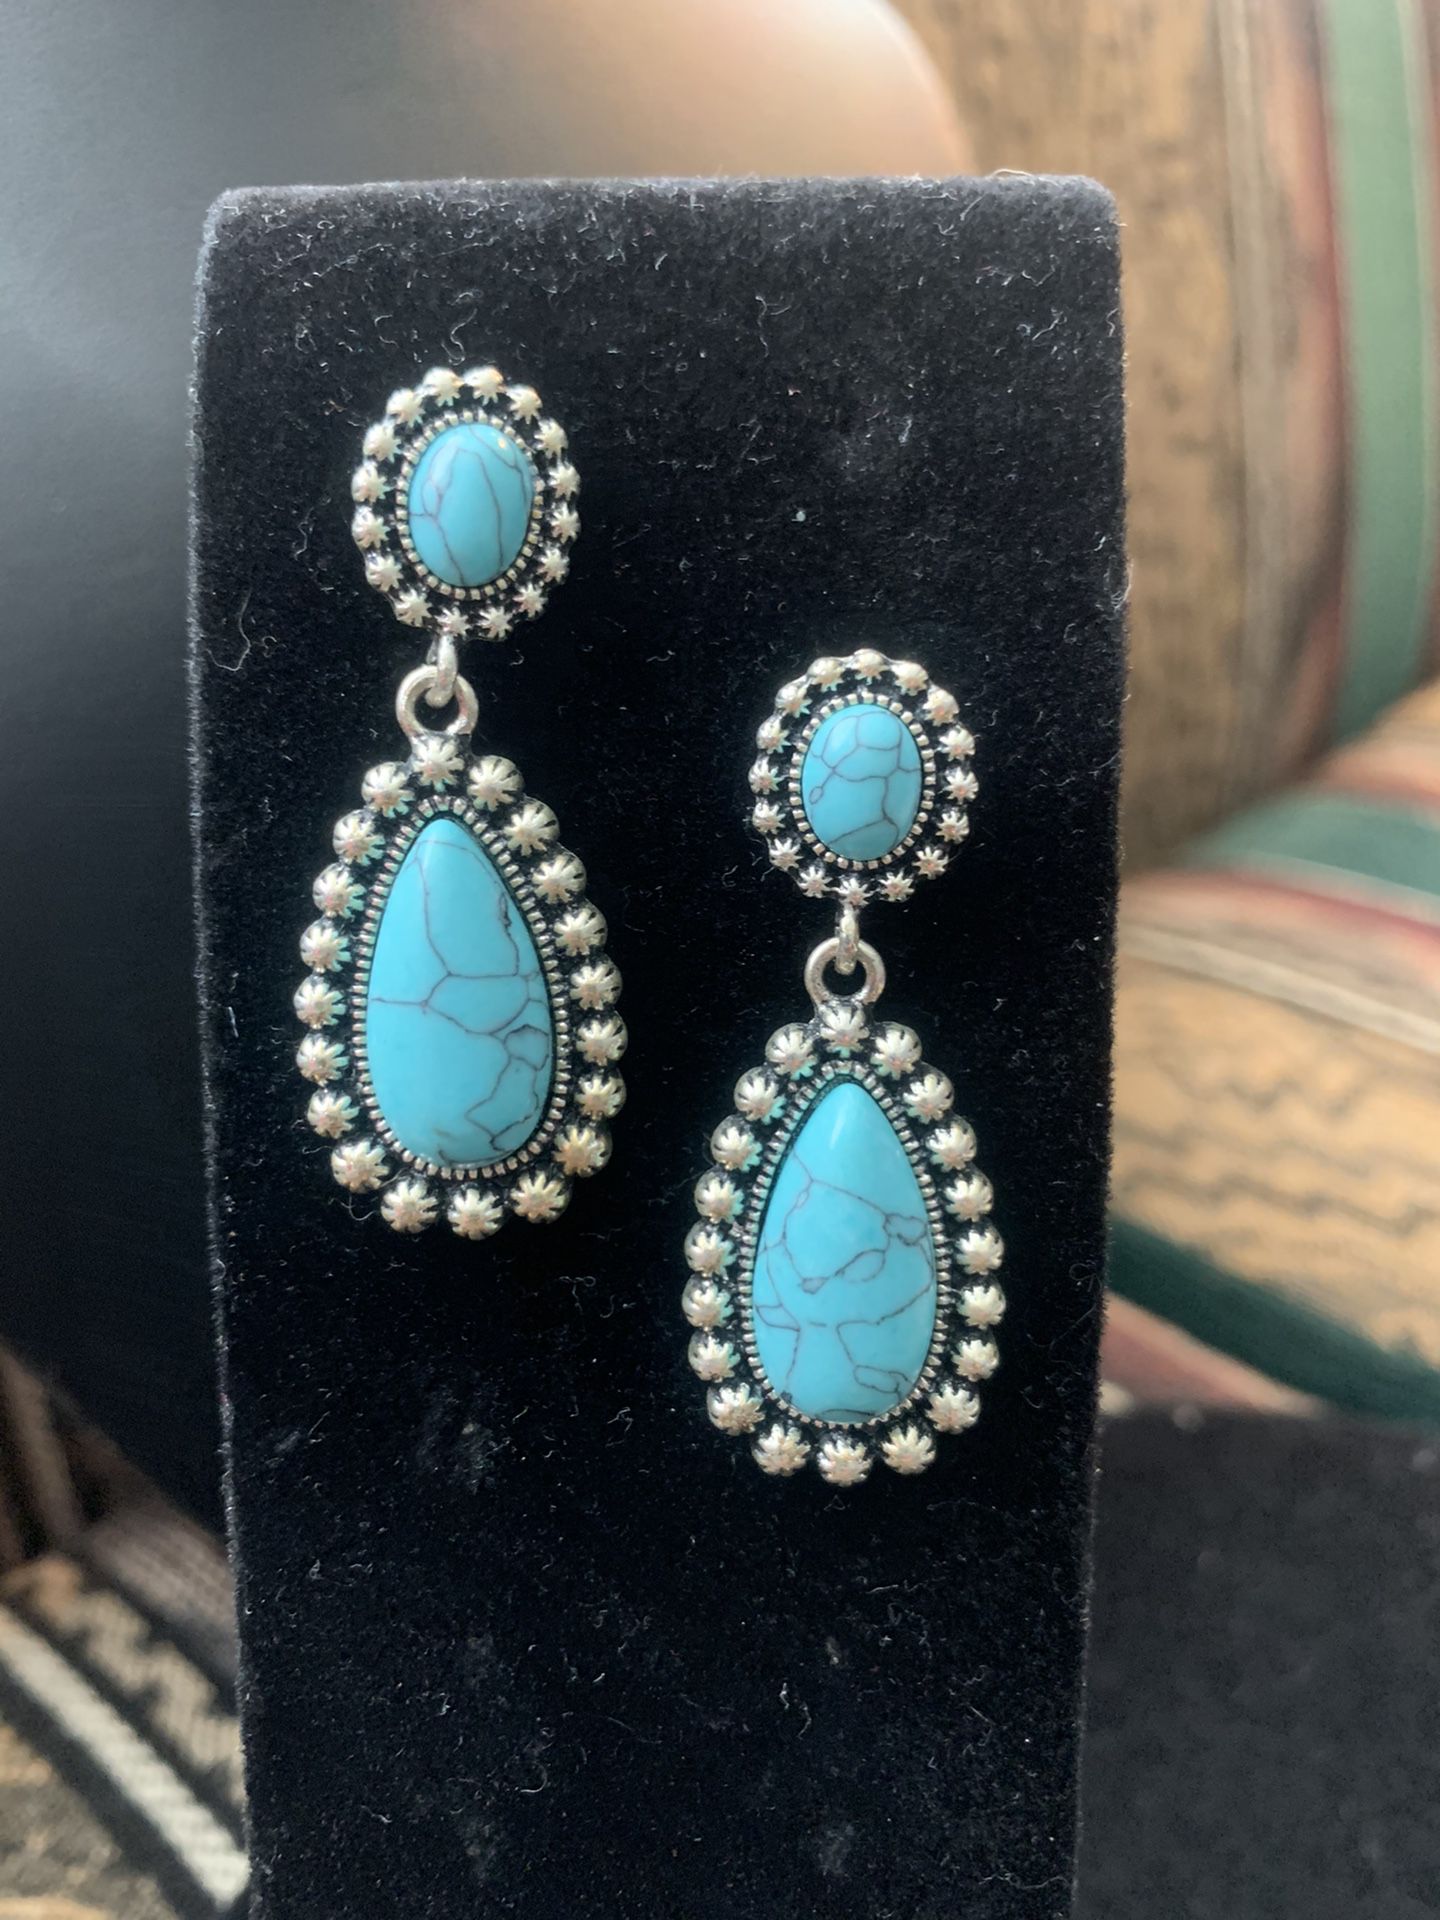 Costume turquoise earrings